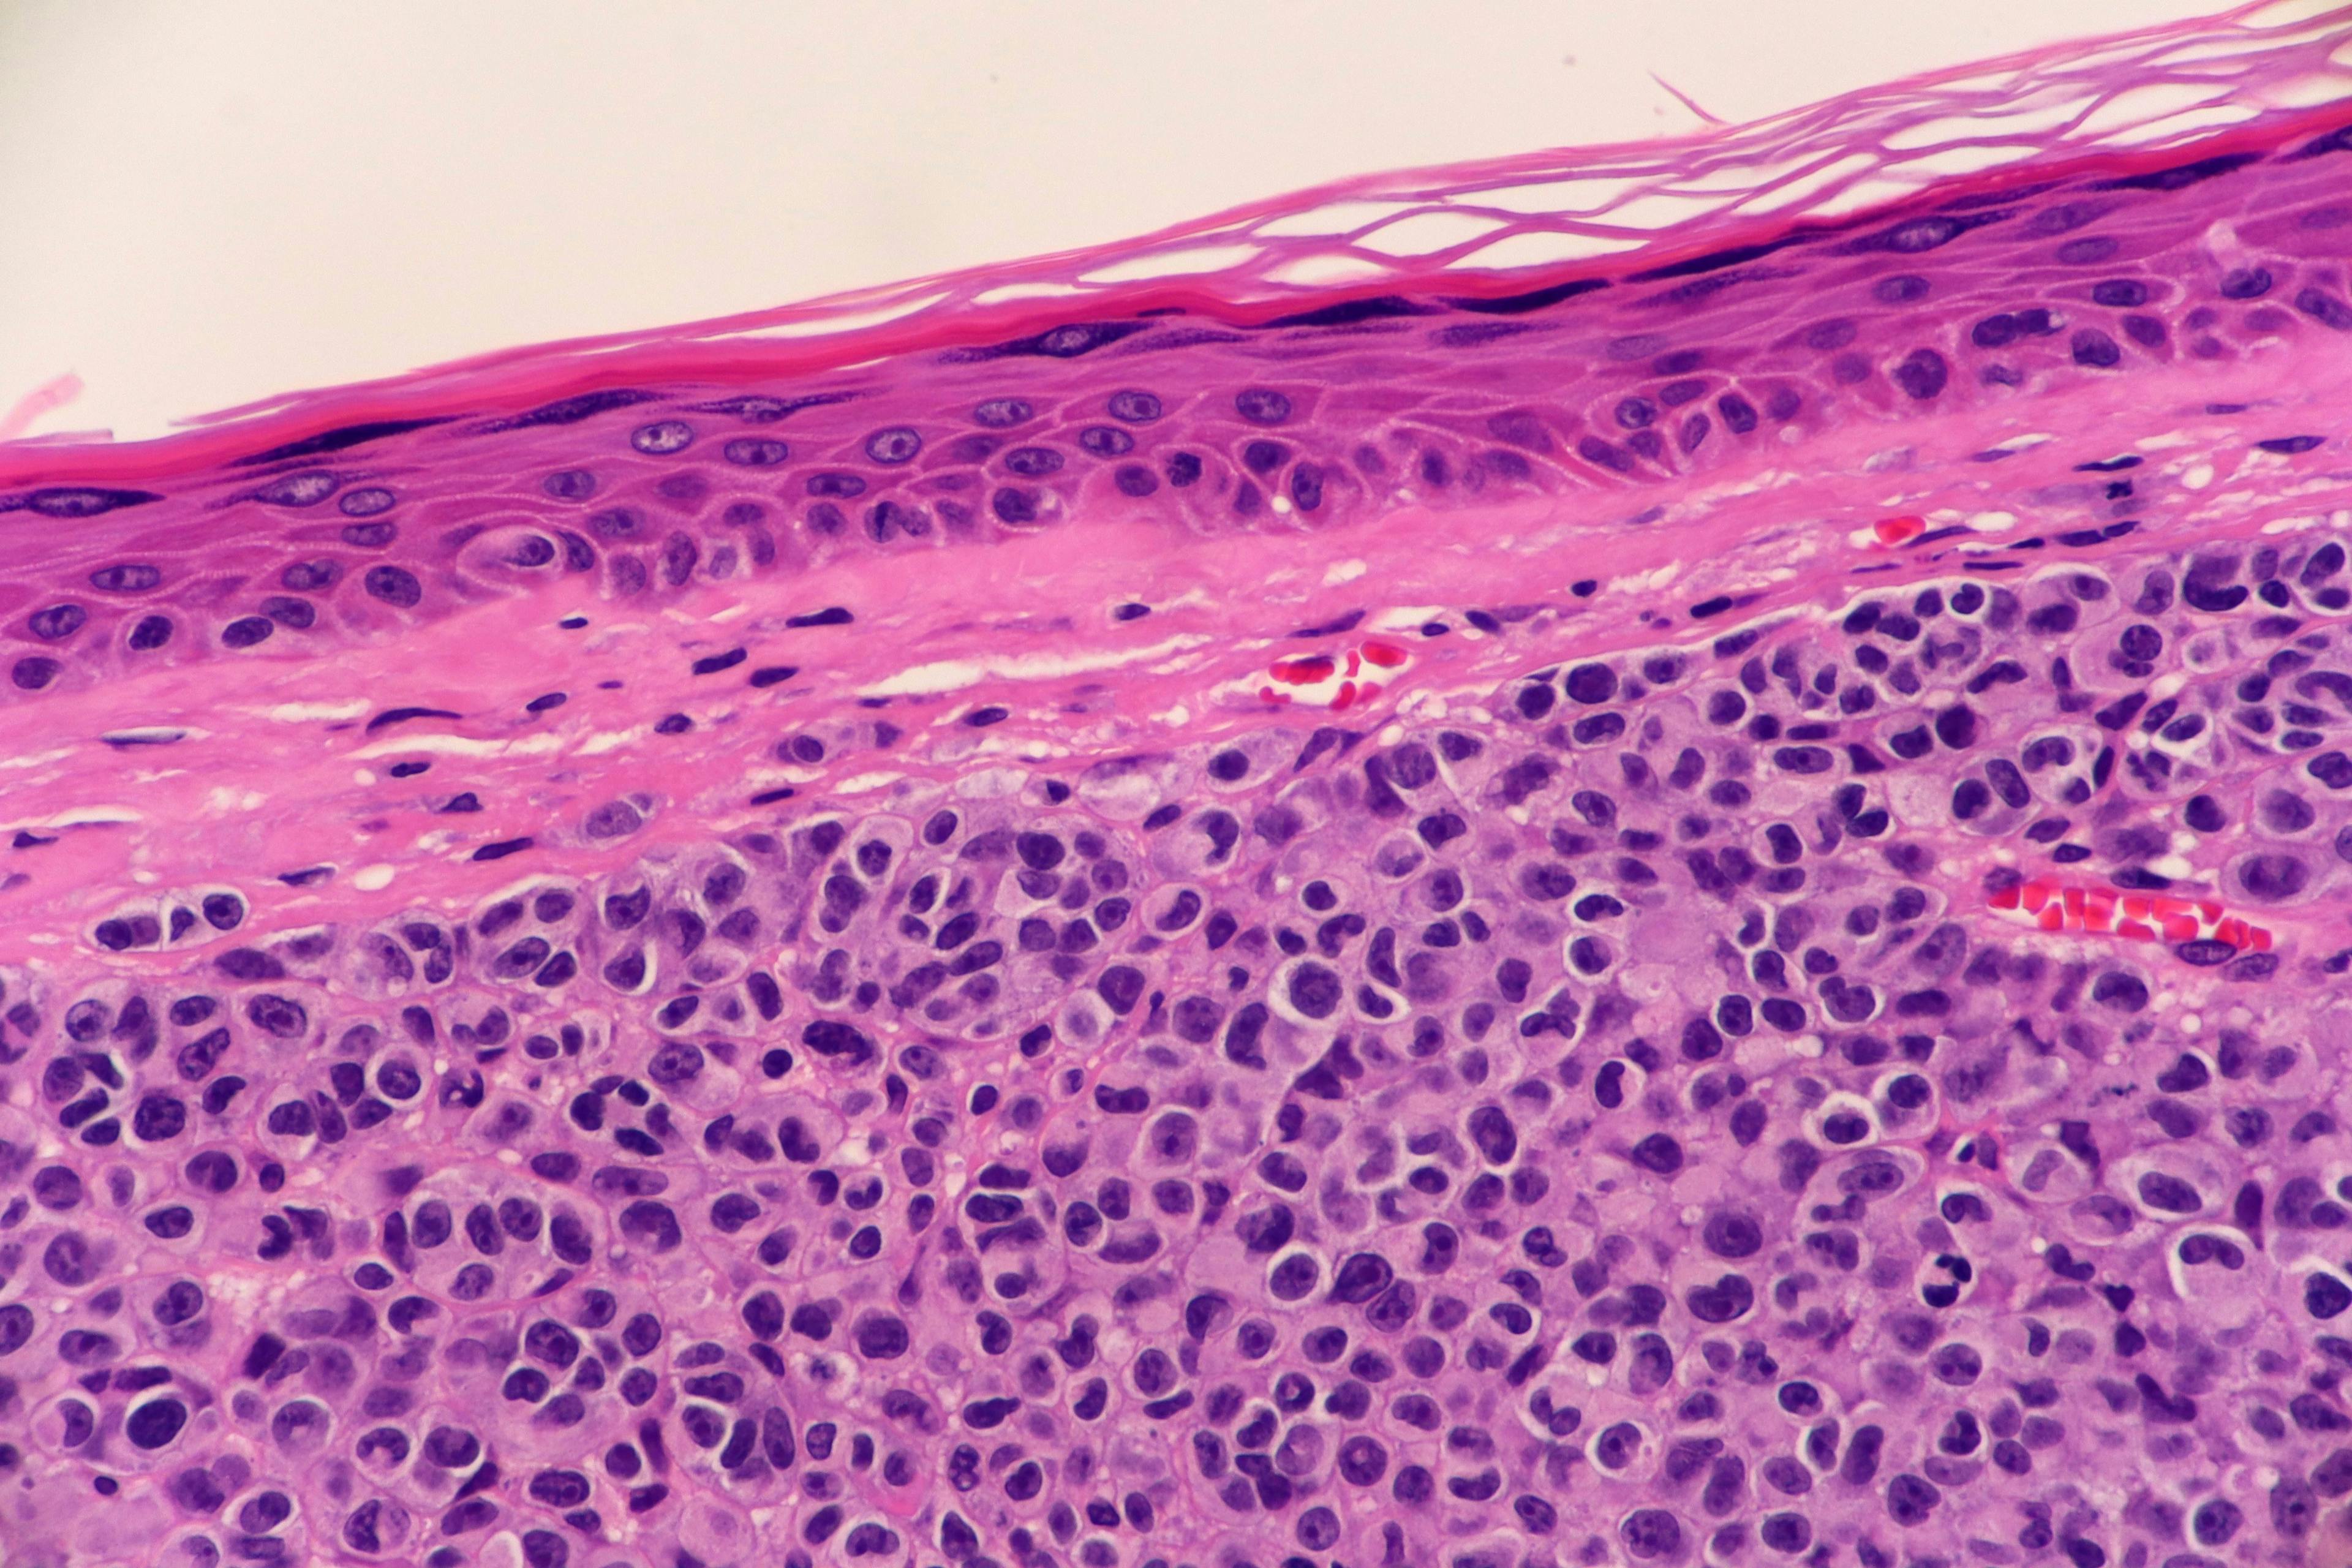 Microscopic View of Nodular Melanoma | image credit: Lisa - stock.adobe.com